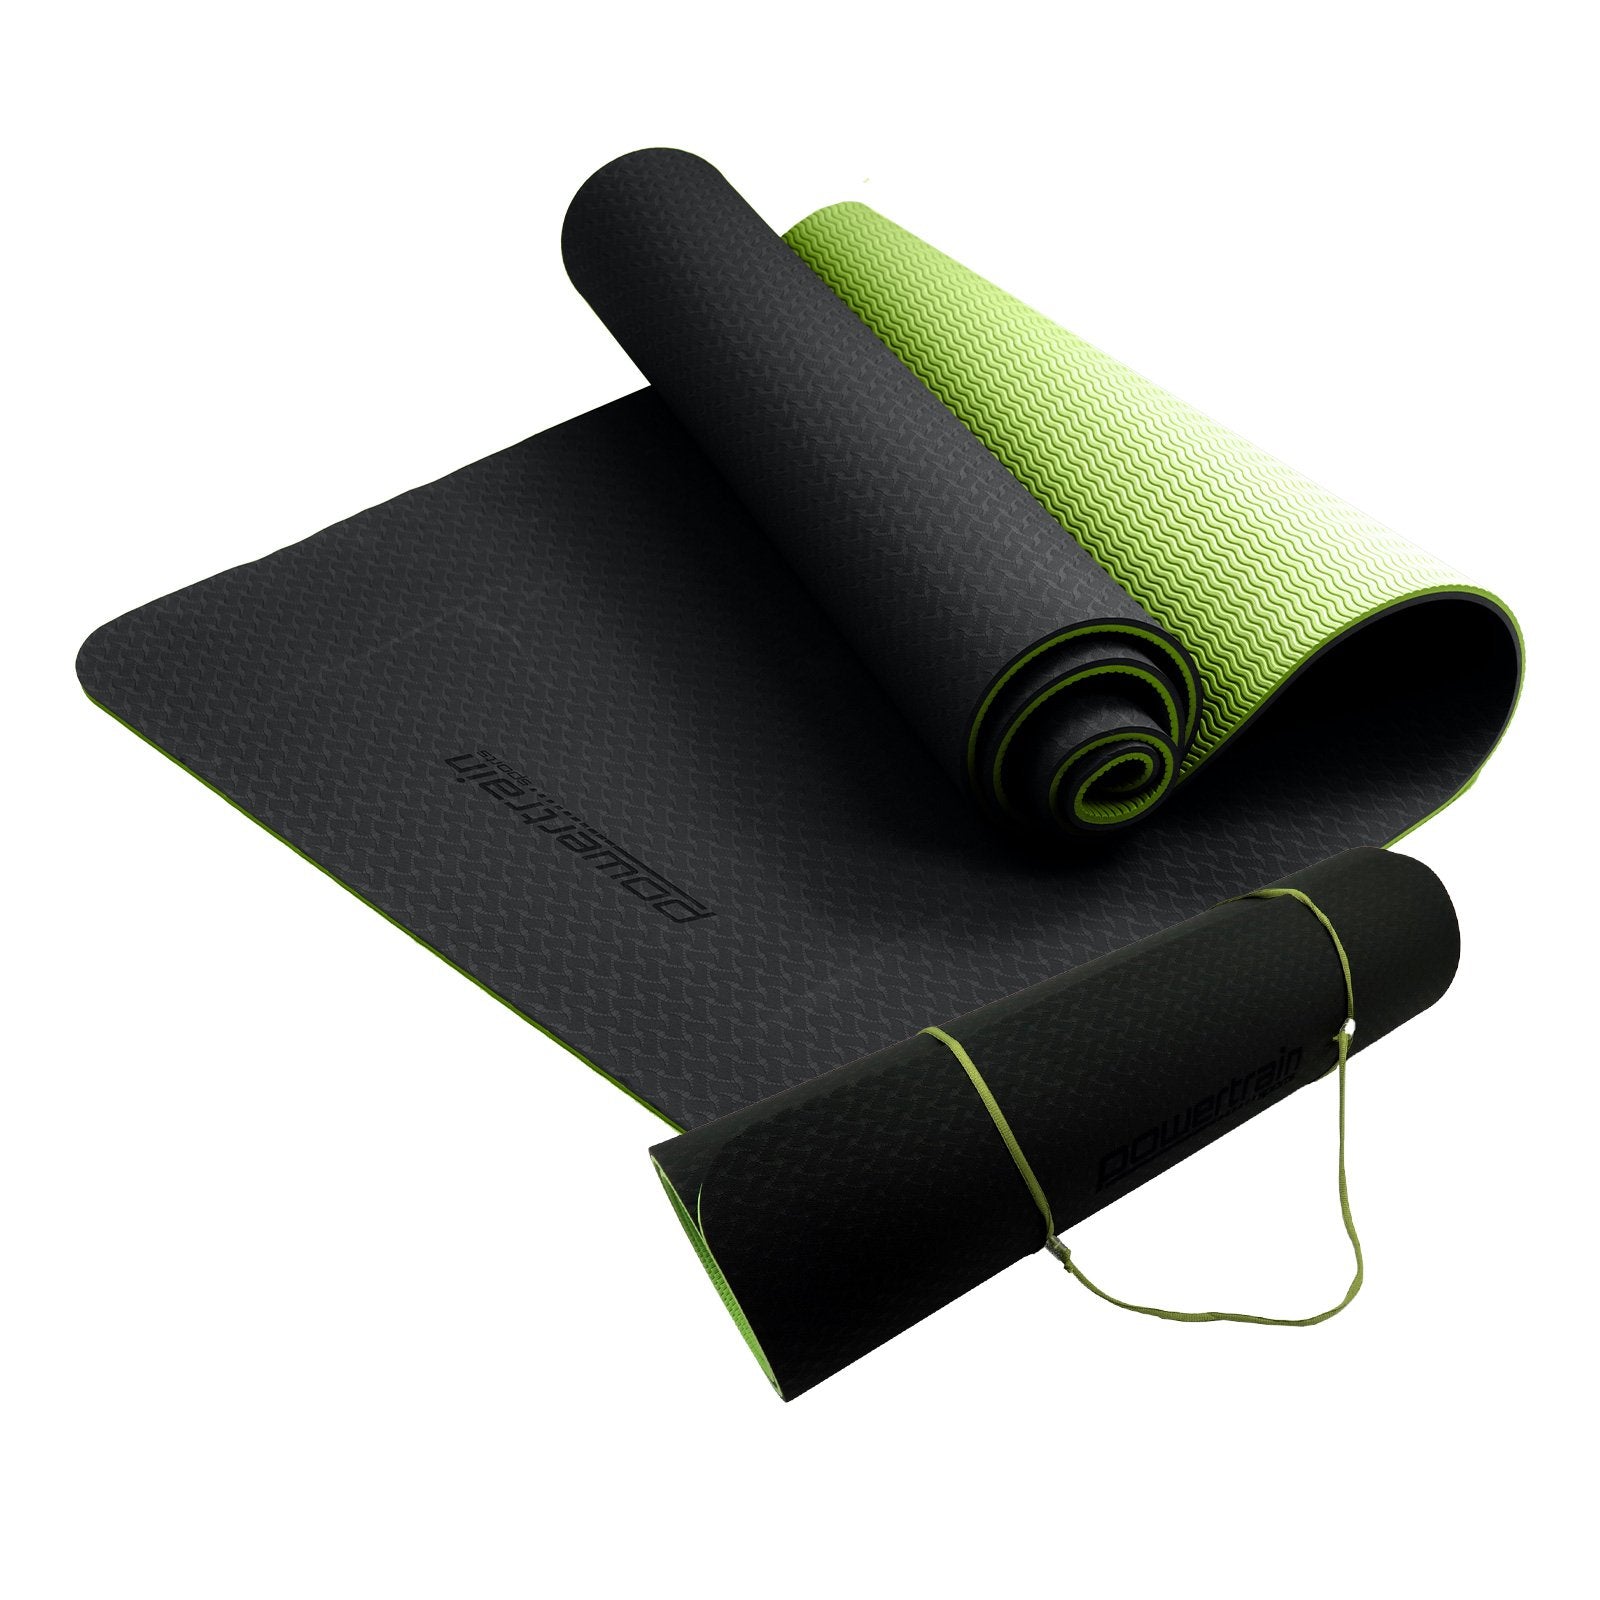 Powertrain Eco-Friendly Pilates Exercise Yoga Mat - Black Green